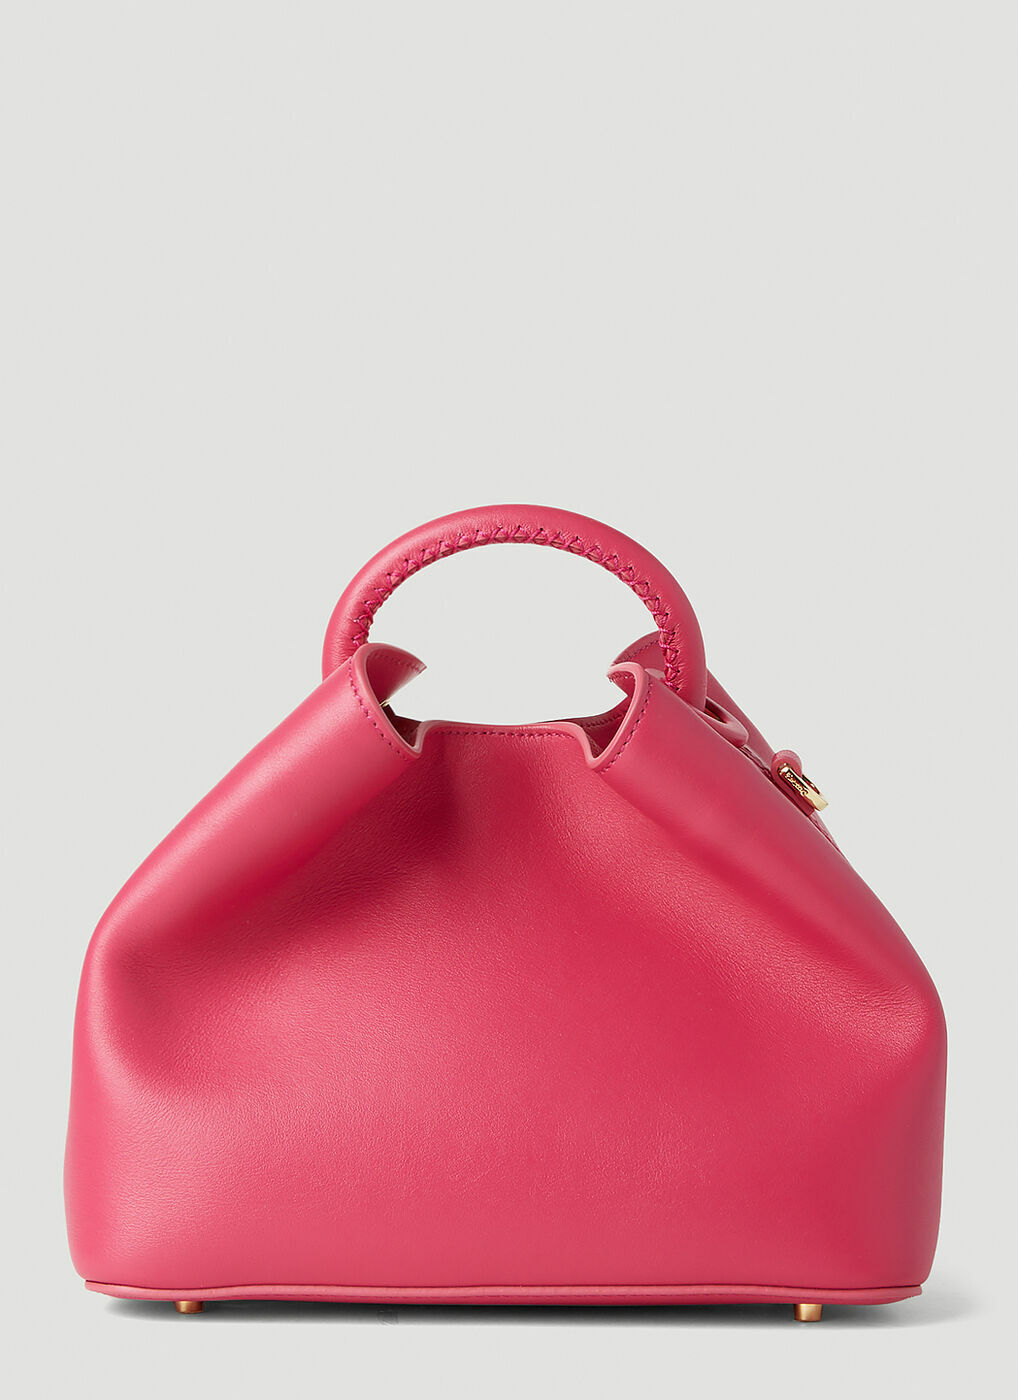 Elleme - Bazoi Handbag in Pink